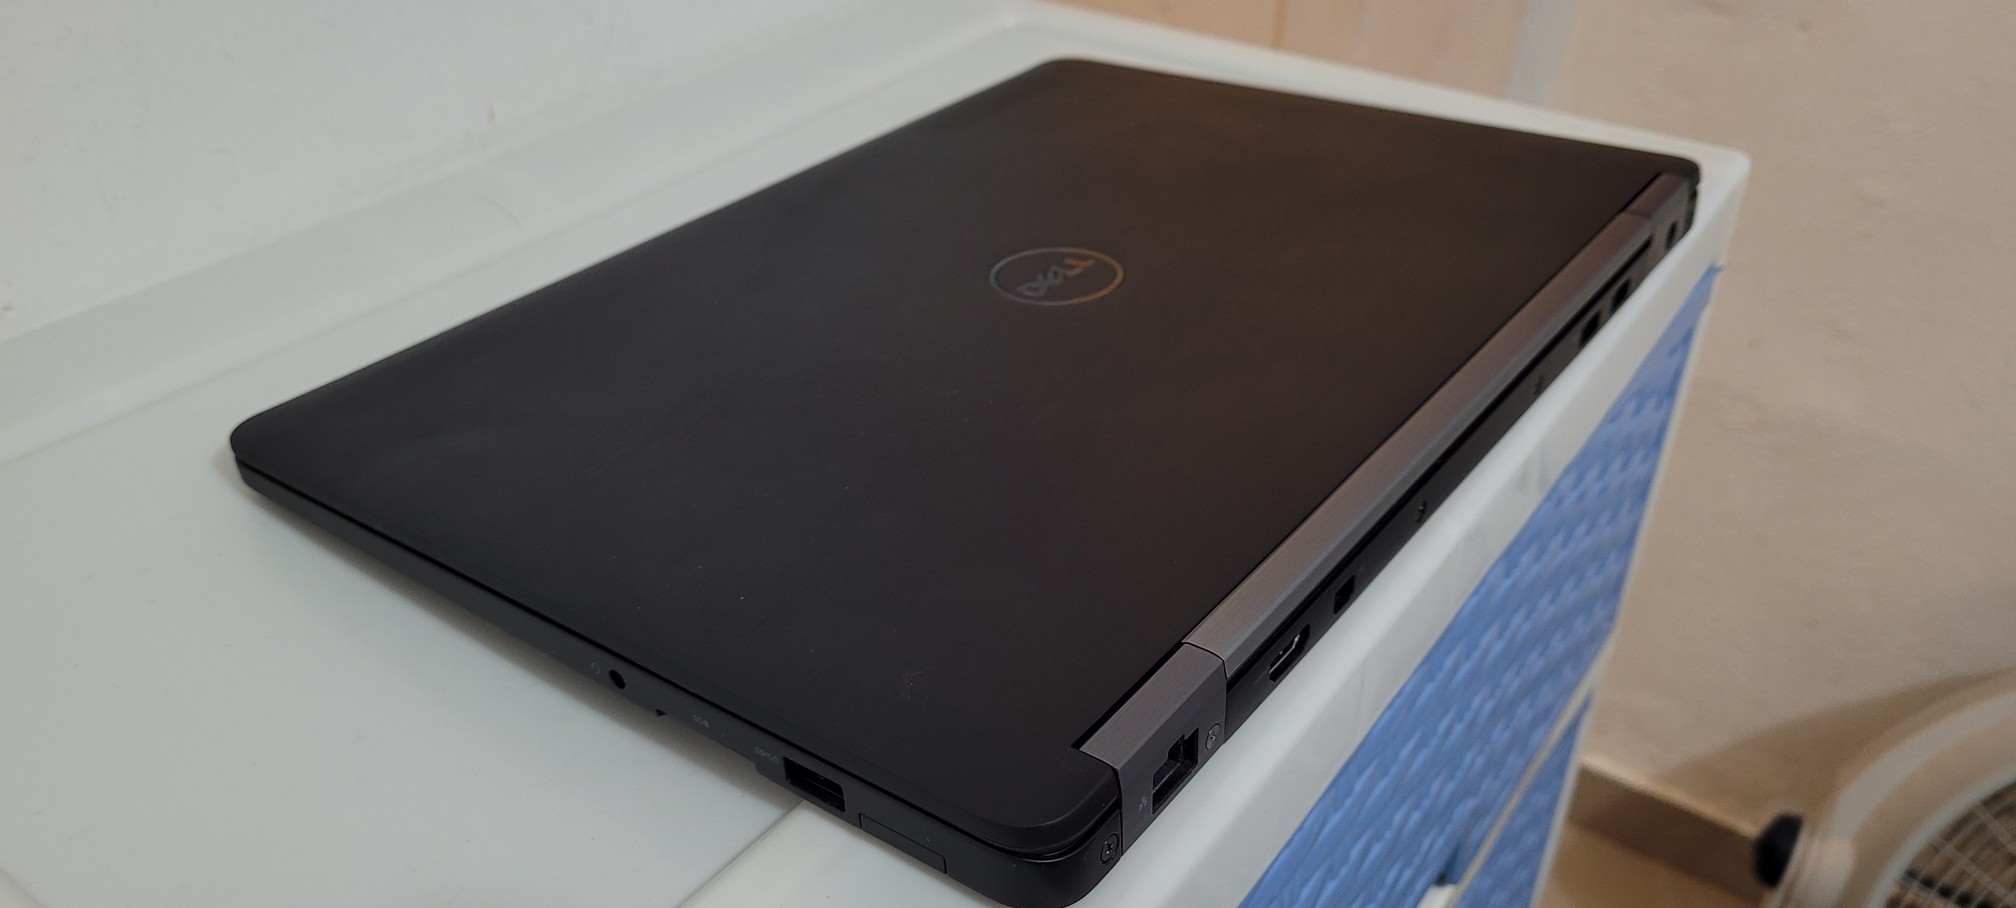 computadoras y laptops - Dell 5580 17 Pulg Core i7 7ma Gen Ram 16gb ddr4 Video intel Y Nvidea 10gb 2